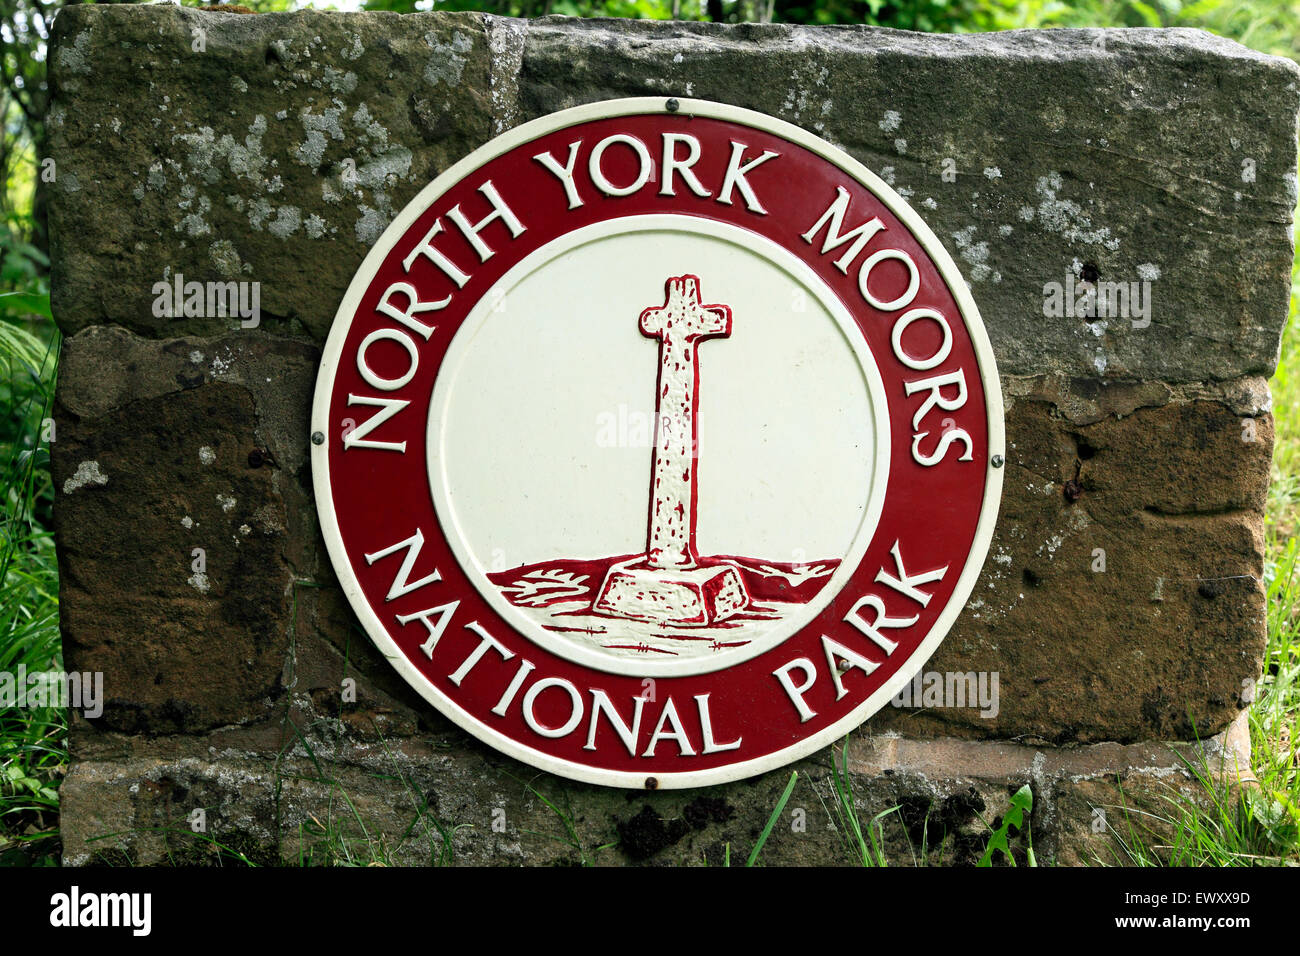 North York Moros, Parque Nacional, signo de fronteras, logo, cerca de Hutton-le-agujero, Hutton Le Hole,Yorkshire Foto de stock